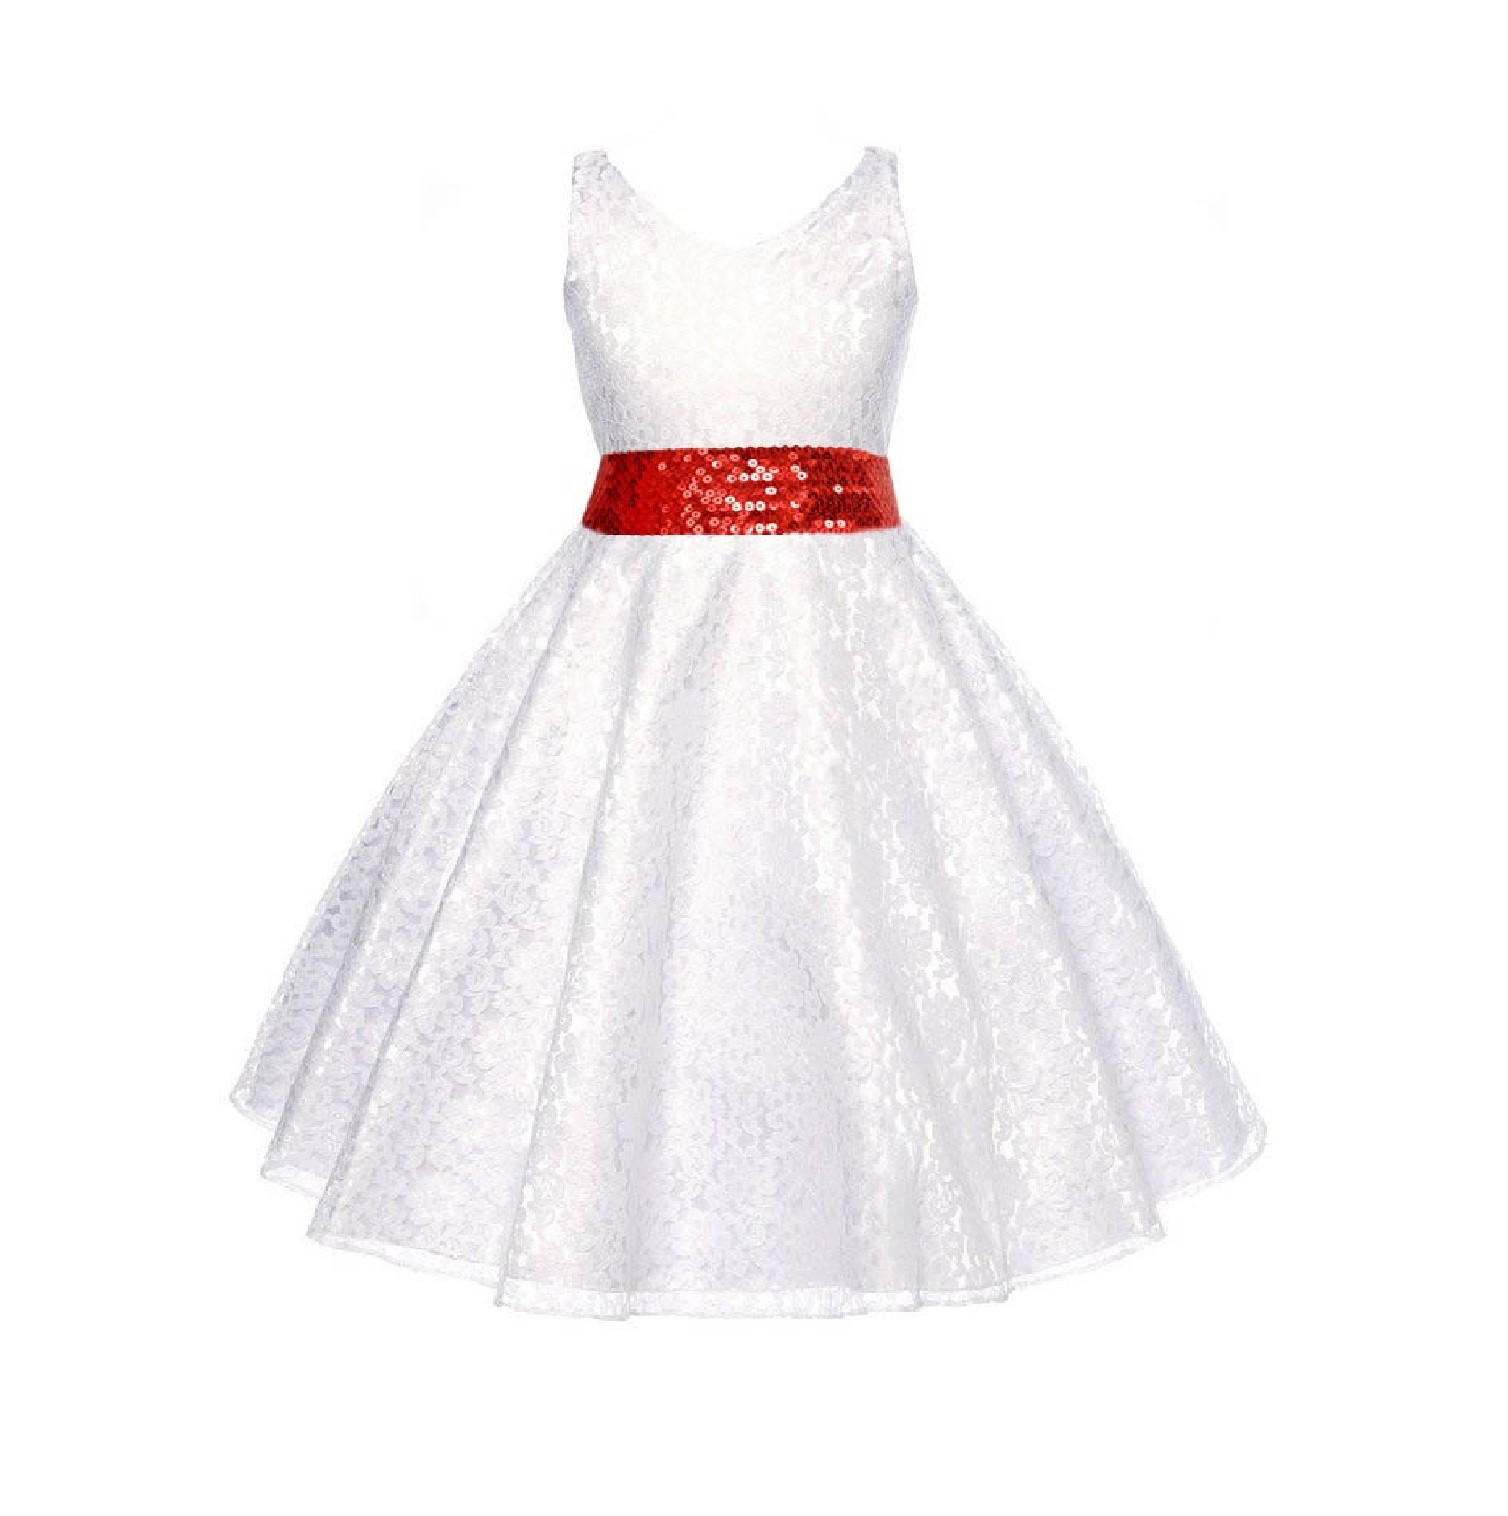 White Floral Lace Overlay V-Neck Red Sequin Flower Girl Dress 166mh